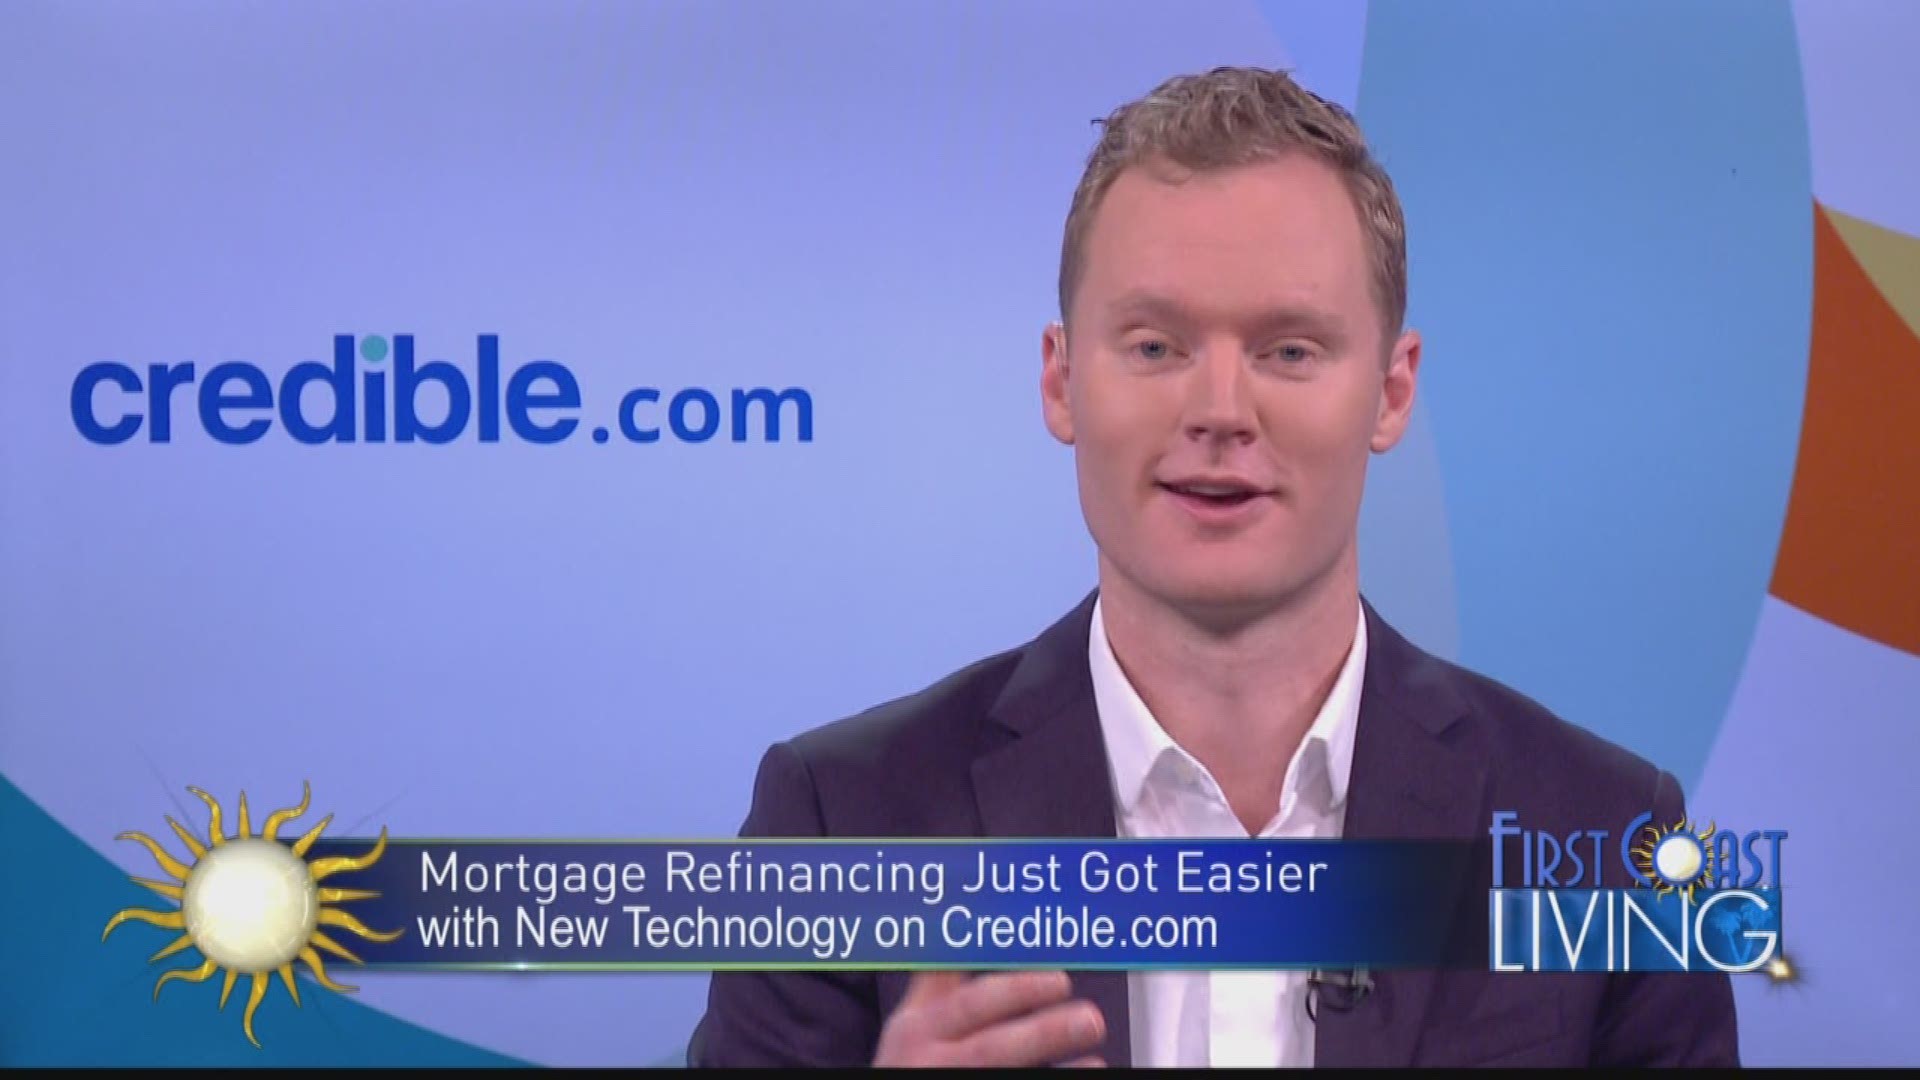 New Mortgage Technology on Credible.com